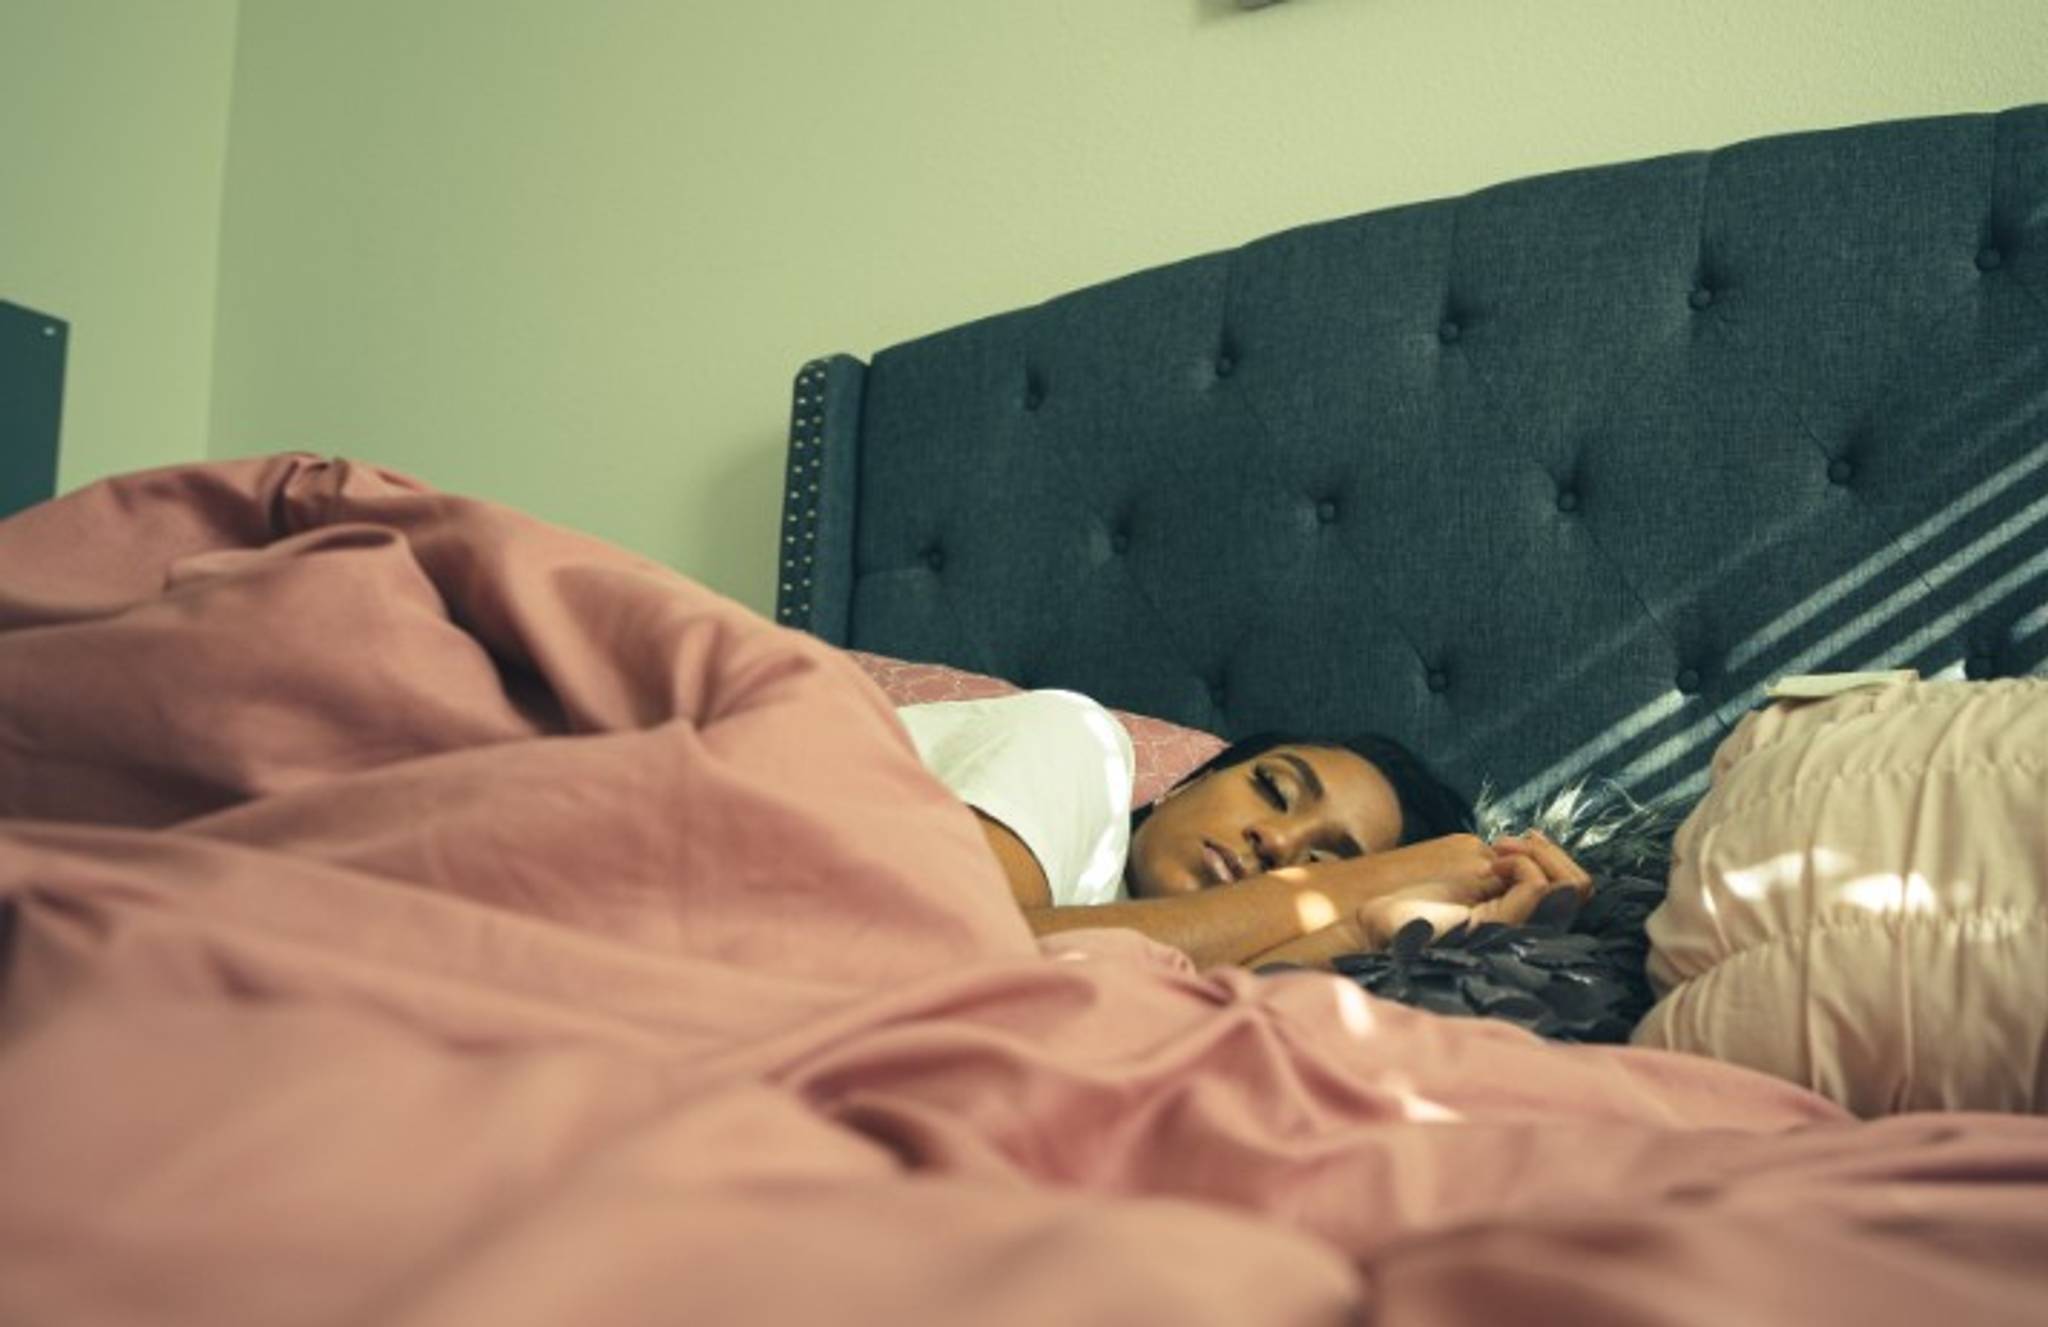 Sleep livestreams offer viewers ‘slower’ screen-time